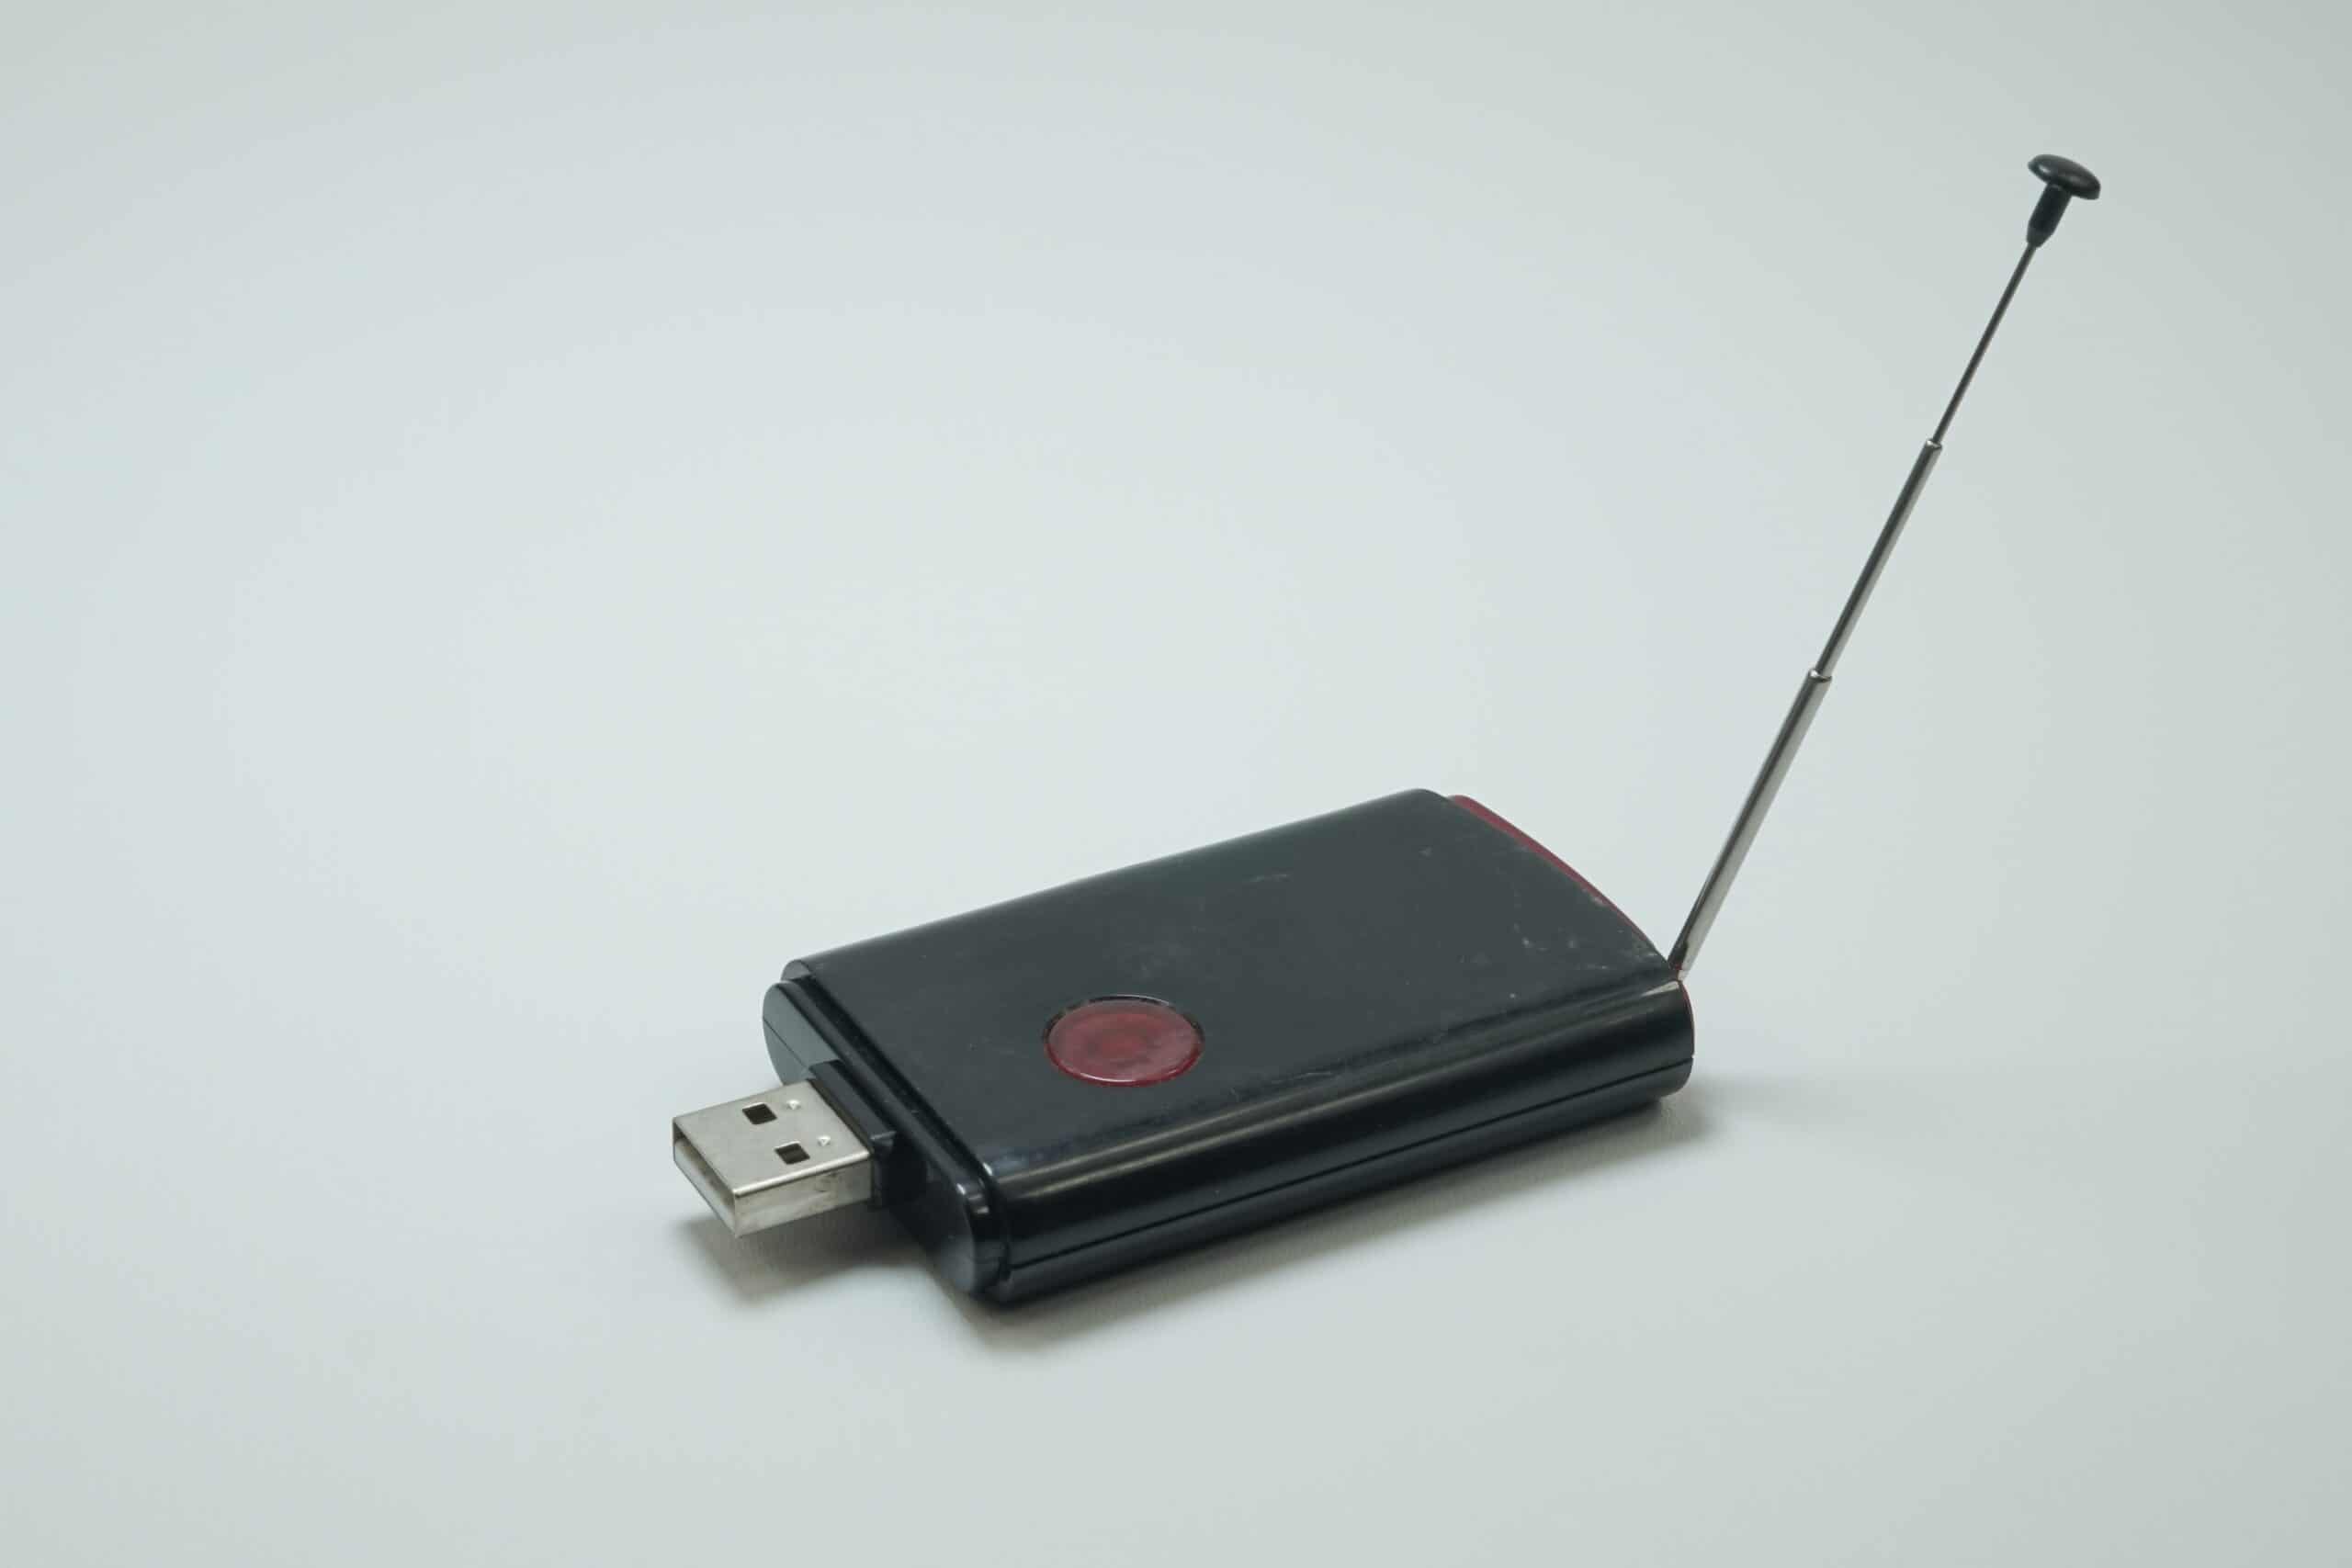 Portable black USB CDMA 3G internet modem with adjustable antenna